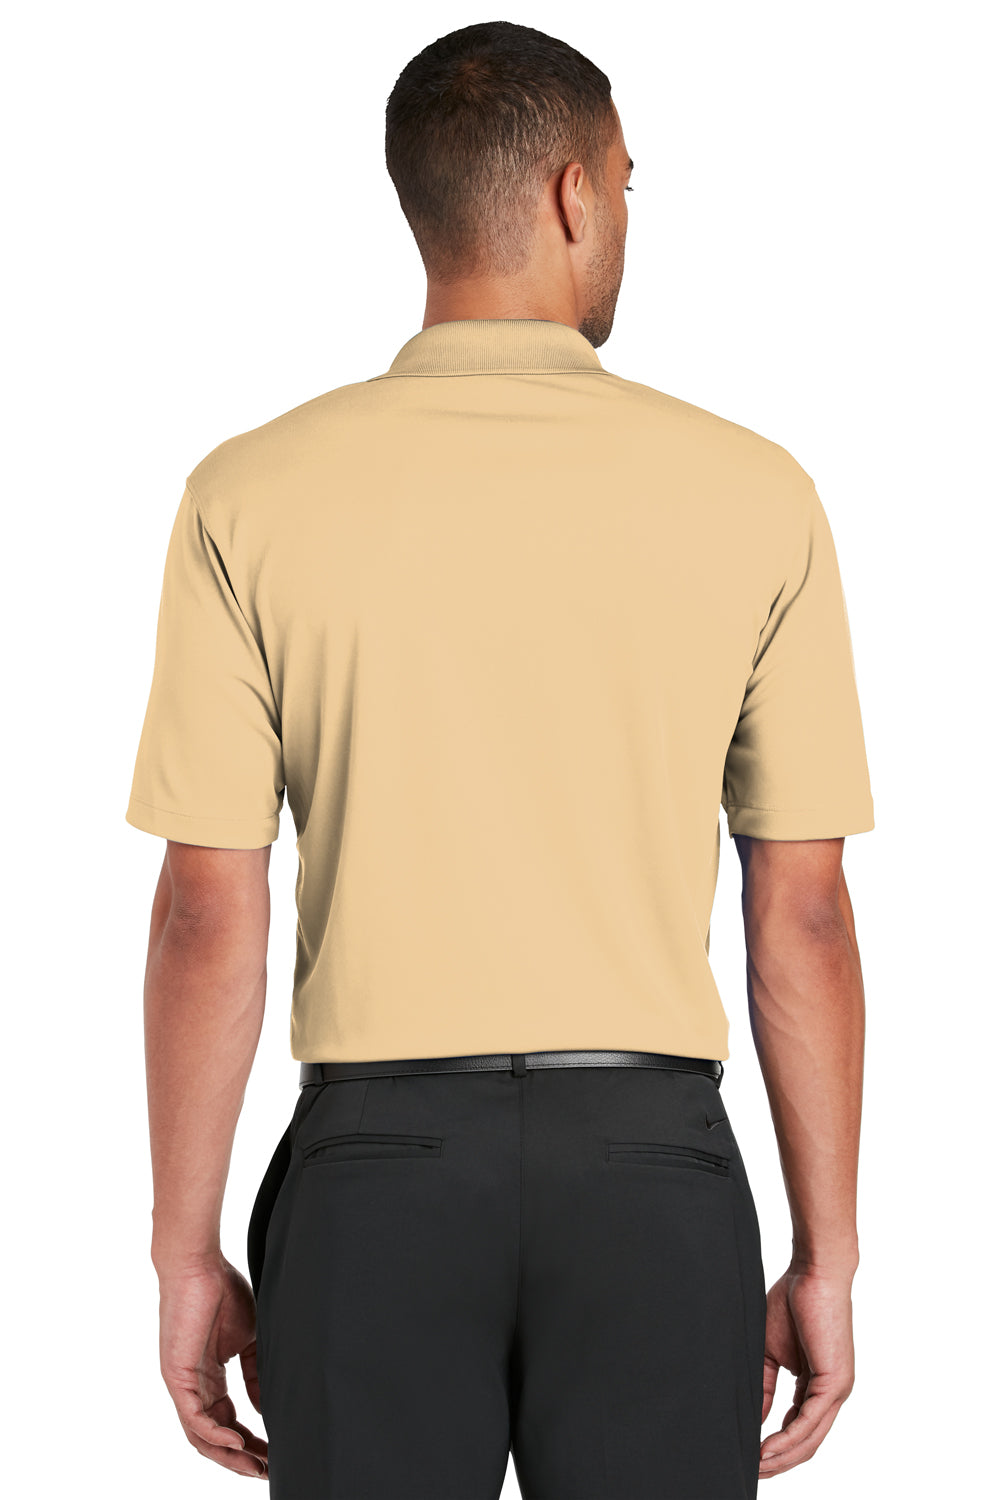 Nike 363807 Mens Dri-Fit Moisture Wicking Short Sleeve Polo Shirt Pale Vanilla Back